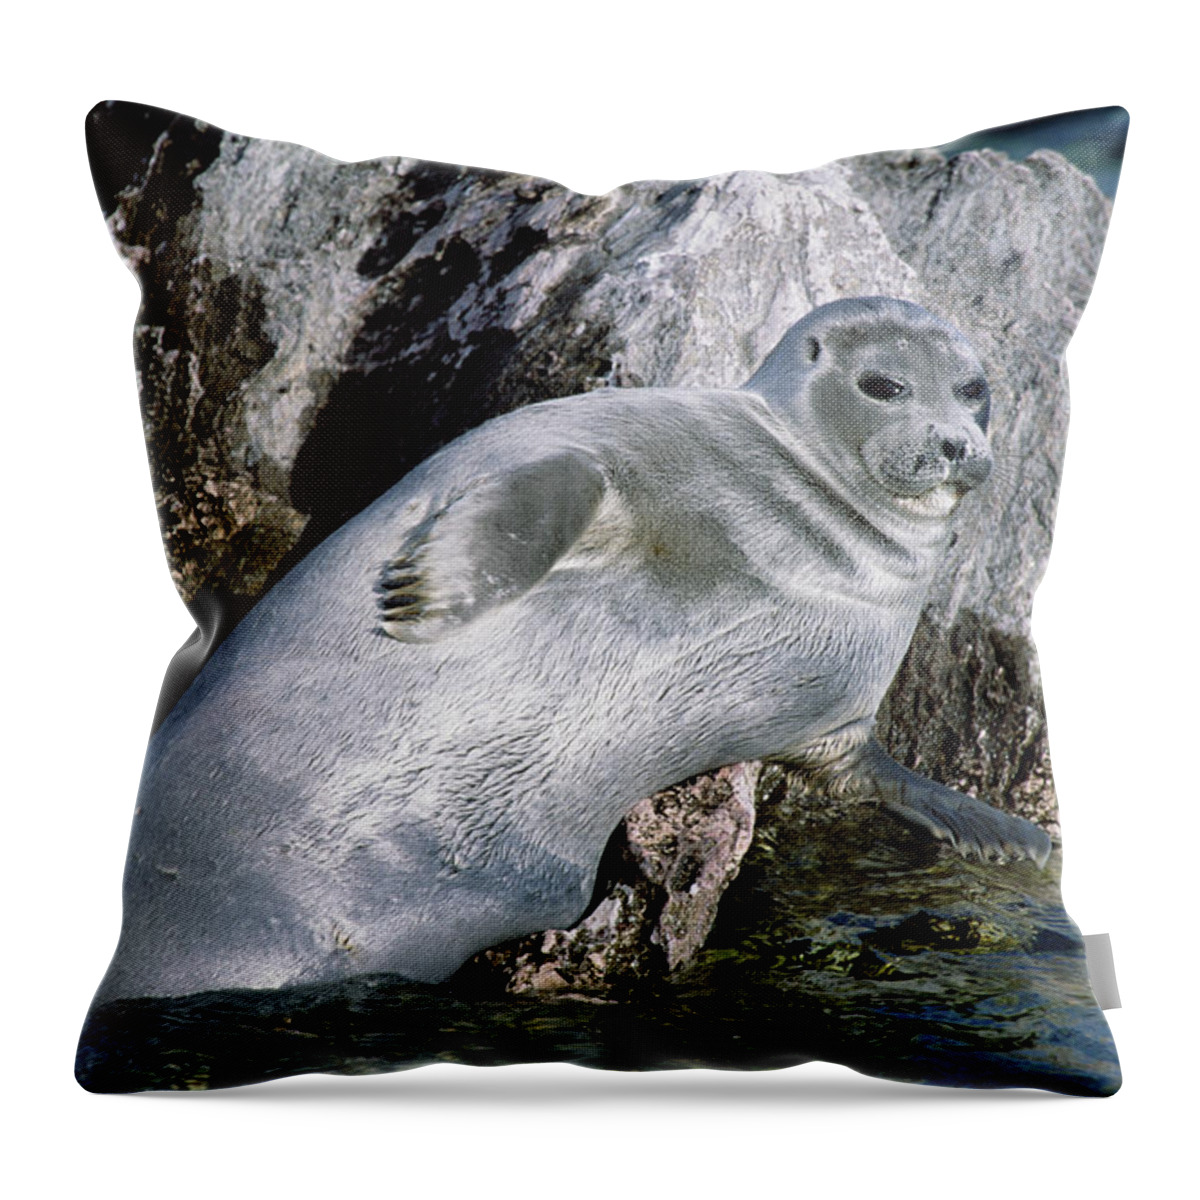 Feb0514 Throw Pillow featuring the photograph Baikal Seal Lake Baikal Russia by Konrad Wothe